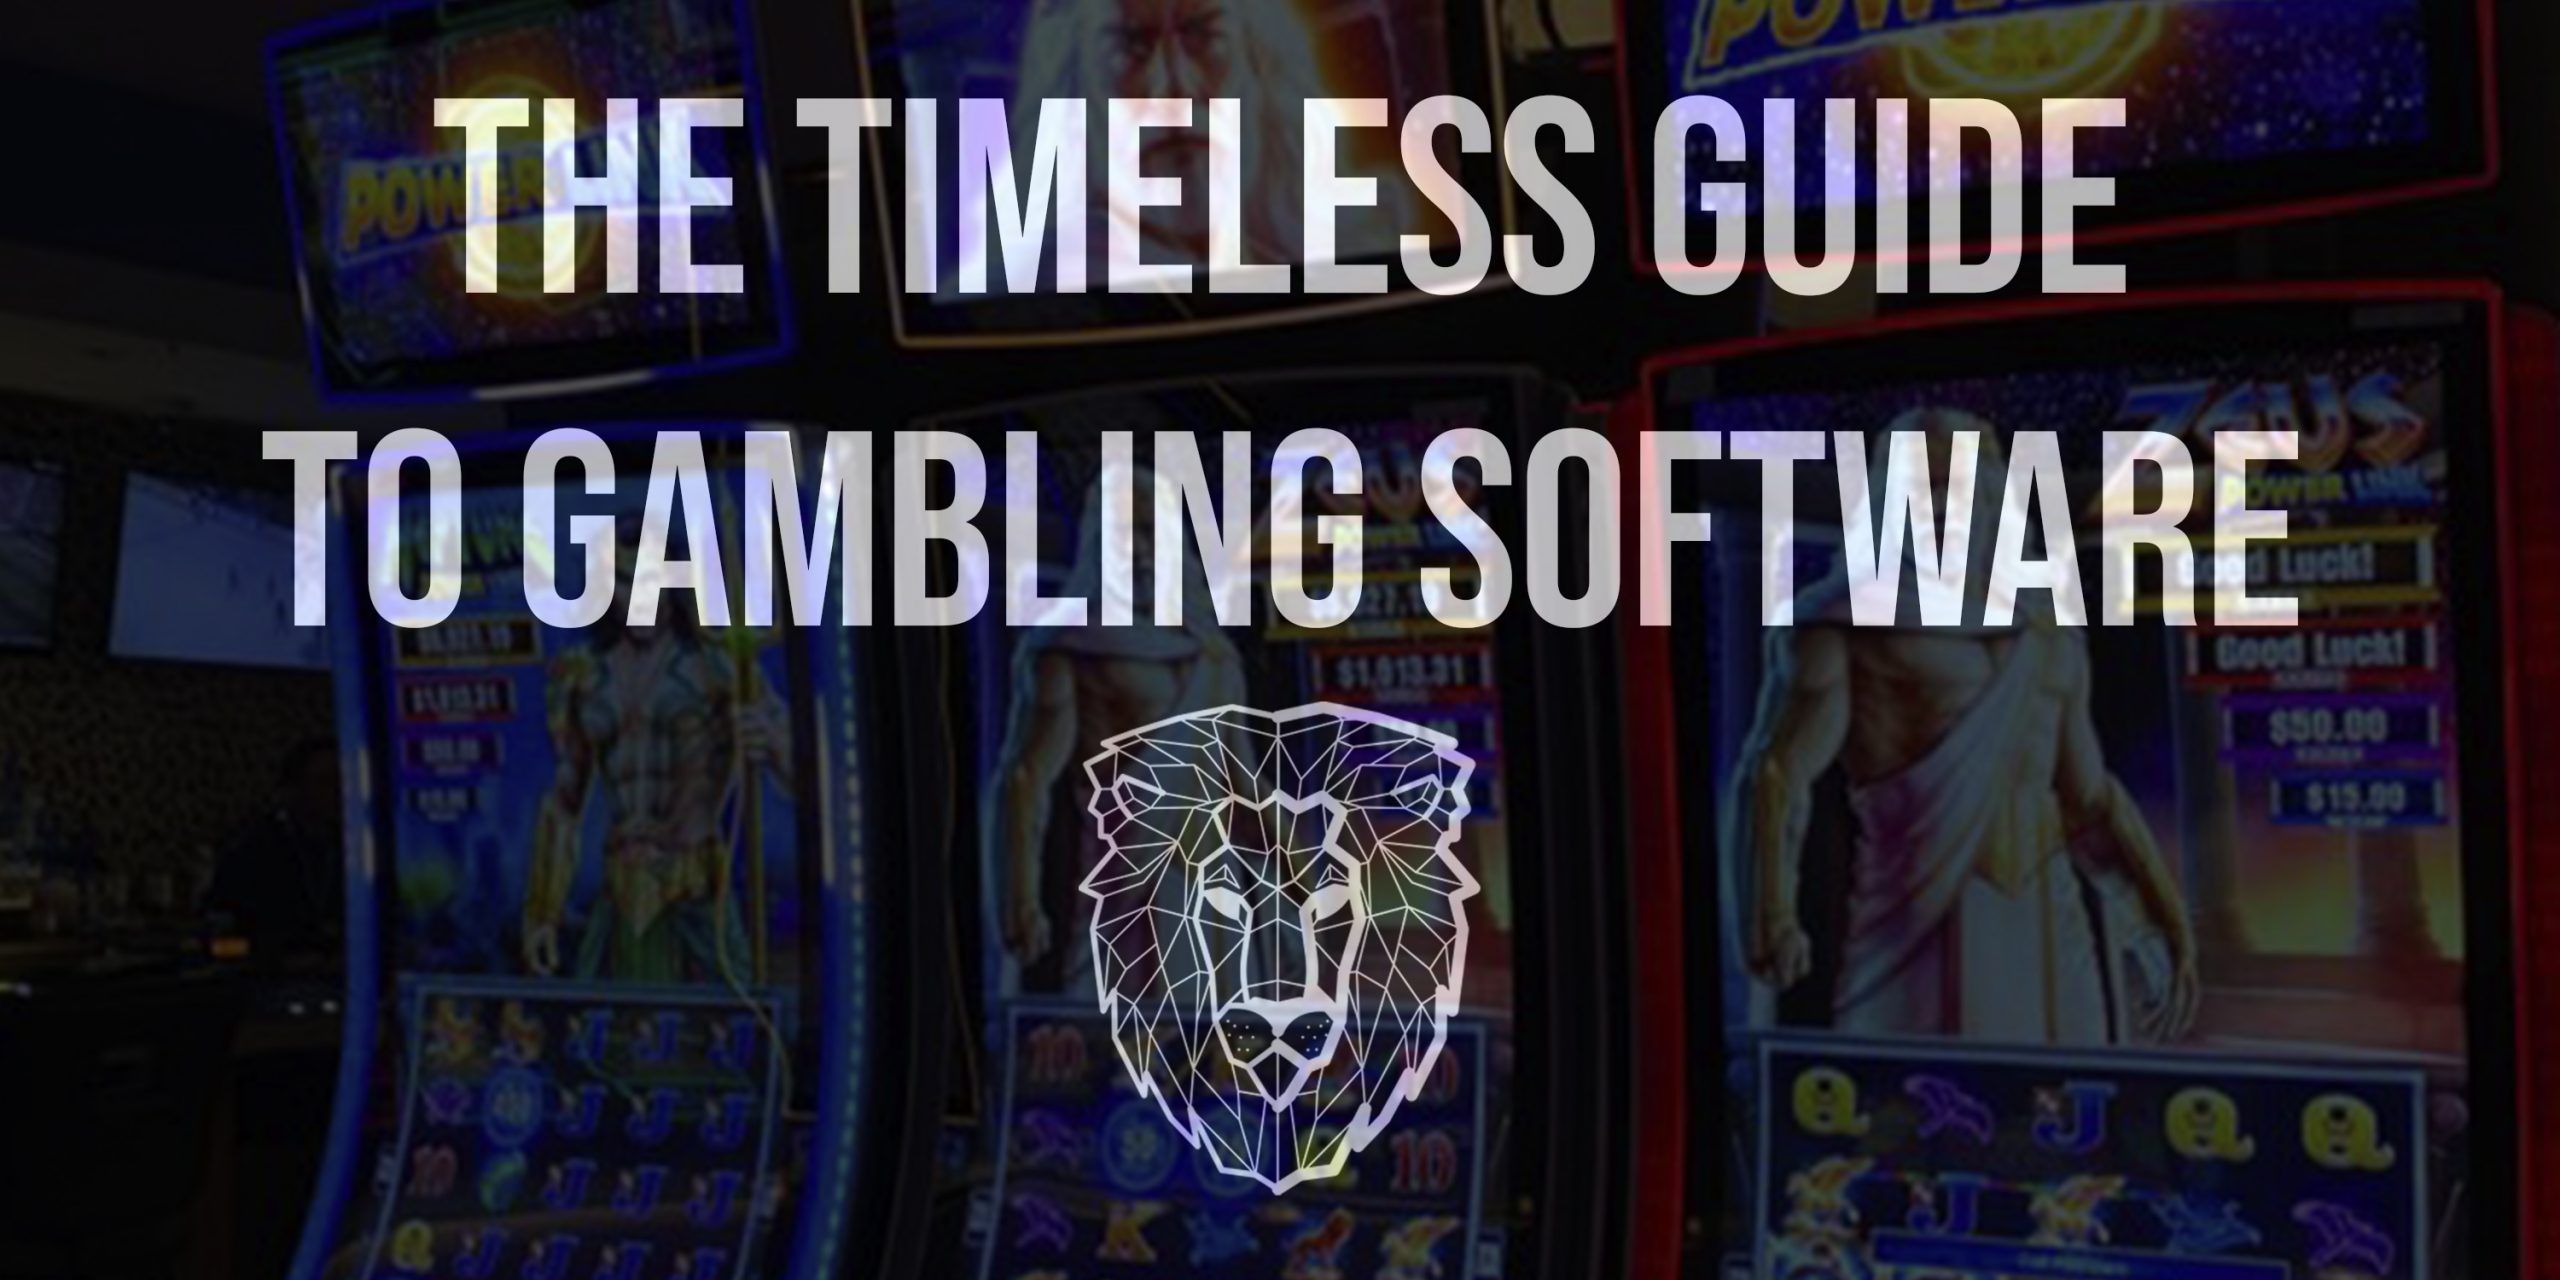 Gambling software for internet cafe, casino terminals software, slots games program